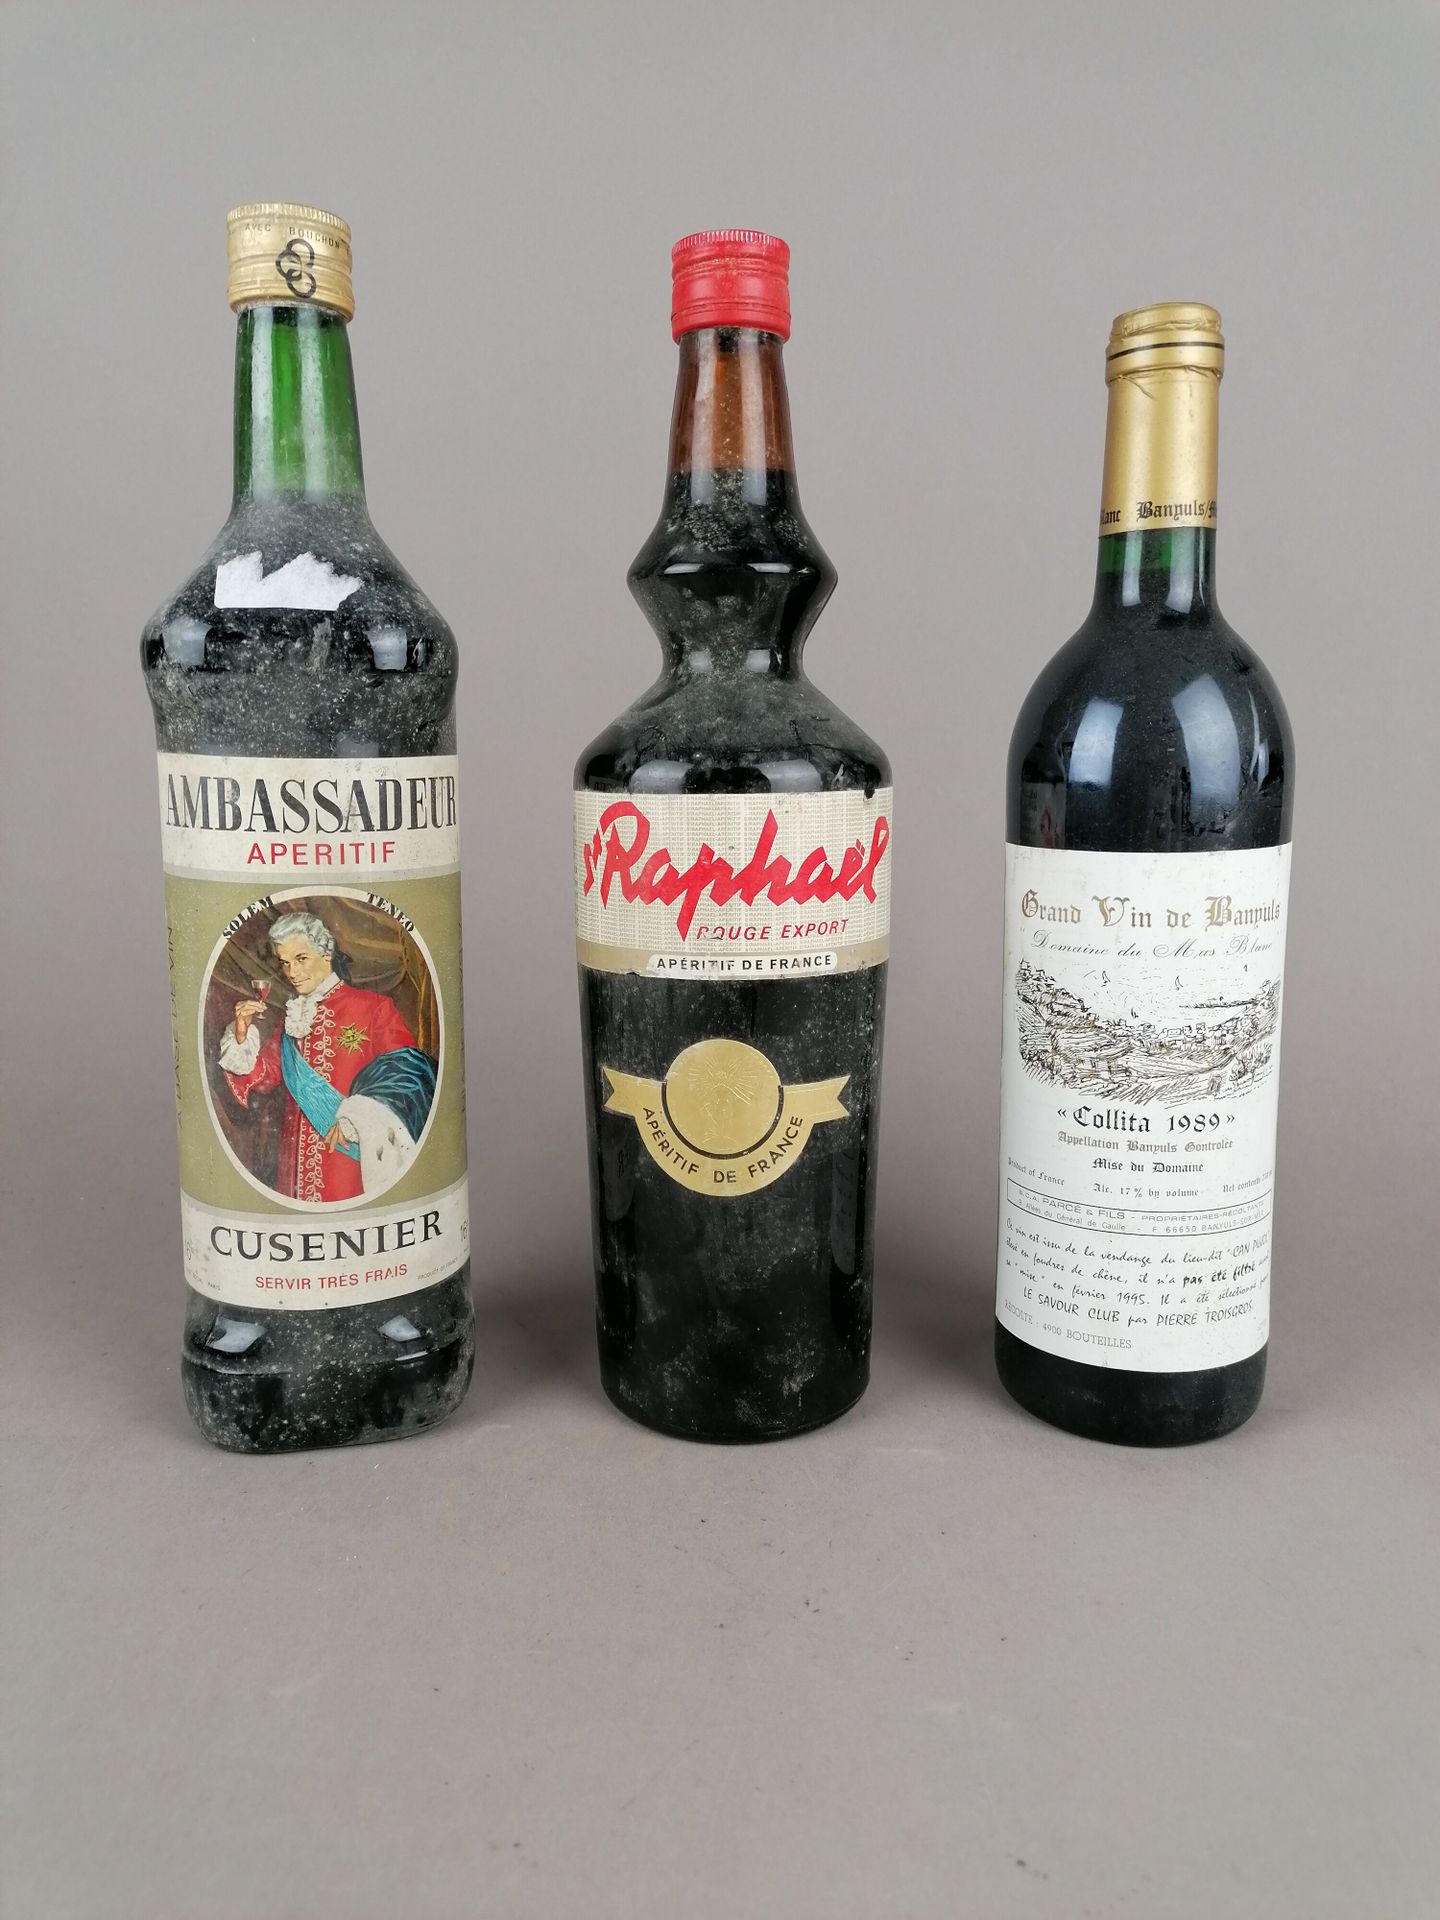 Null LOT 3 bottles :

1 bottle Aperitif Ambassadeur Cusenier

1 bottle Aperitif &hellip;